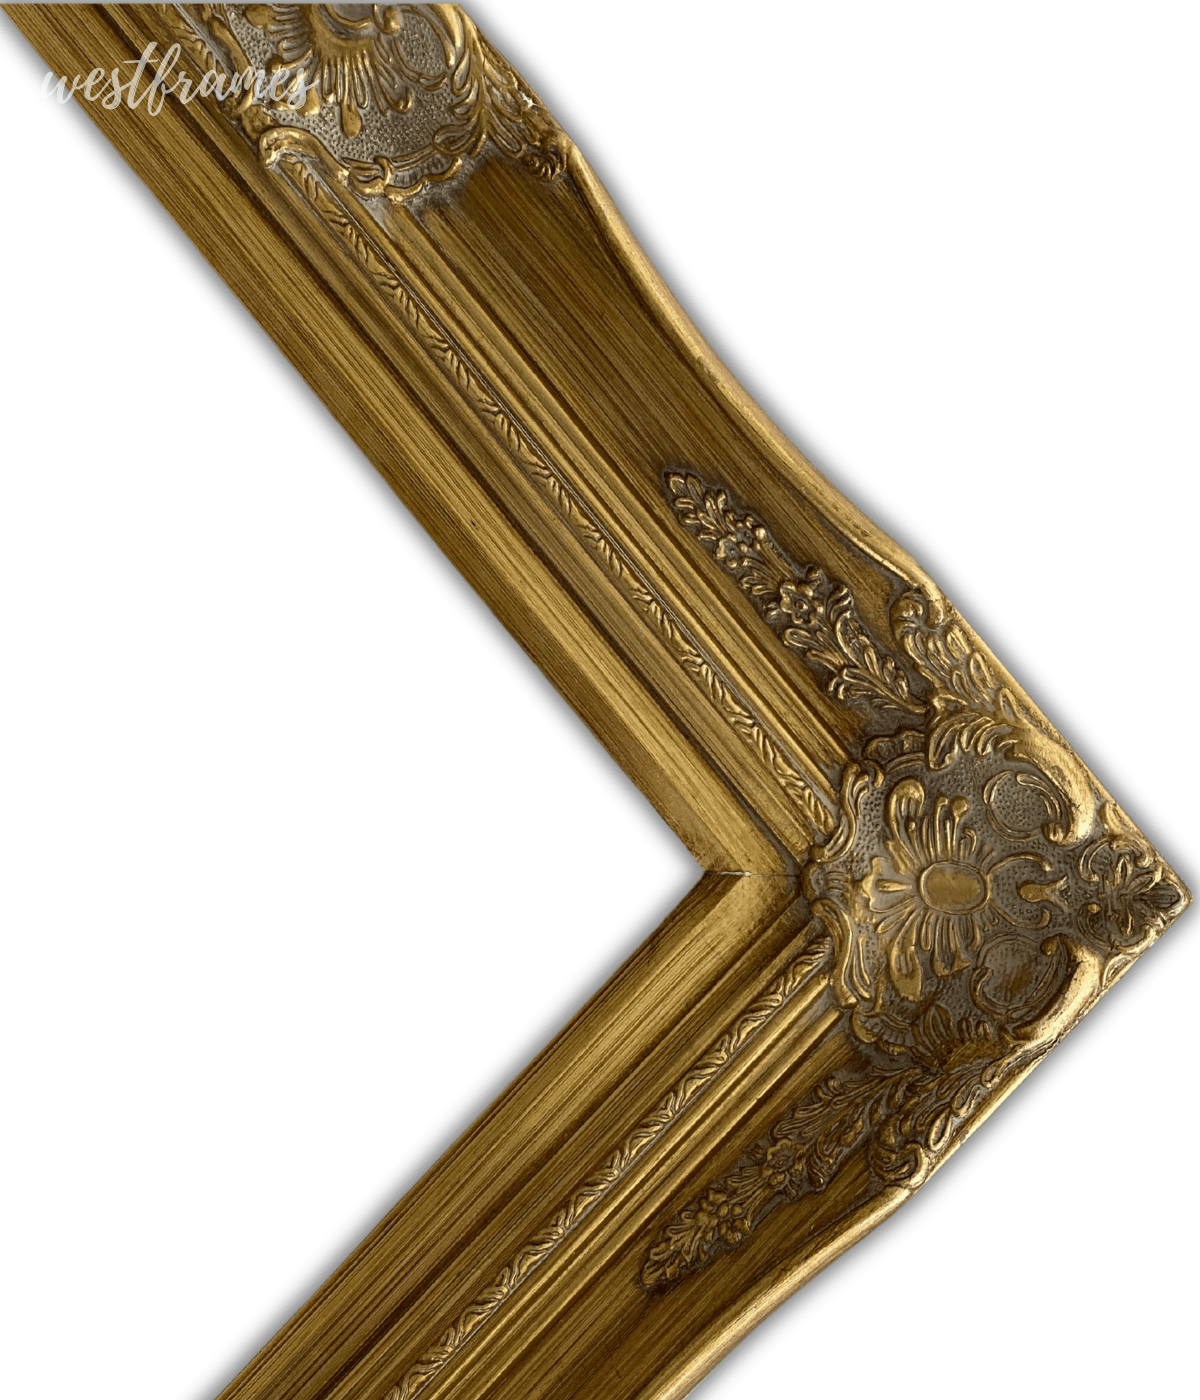 Georgiana Ornate Antique Gold Leaf Wood French Baroque Picture Frame 4" Wide - West Frames